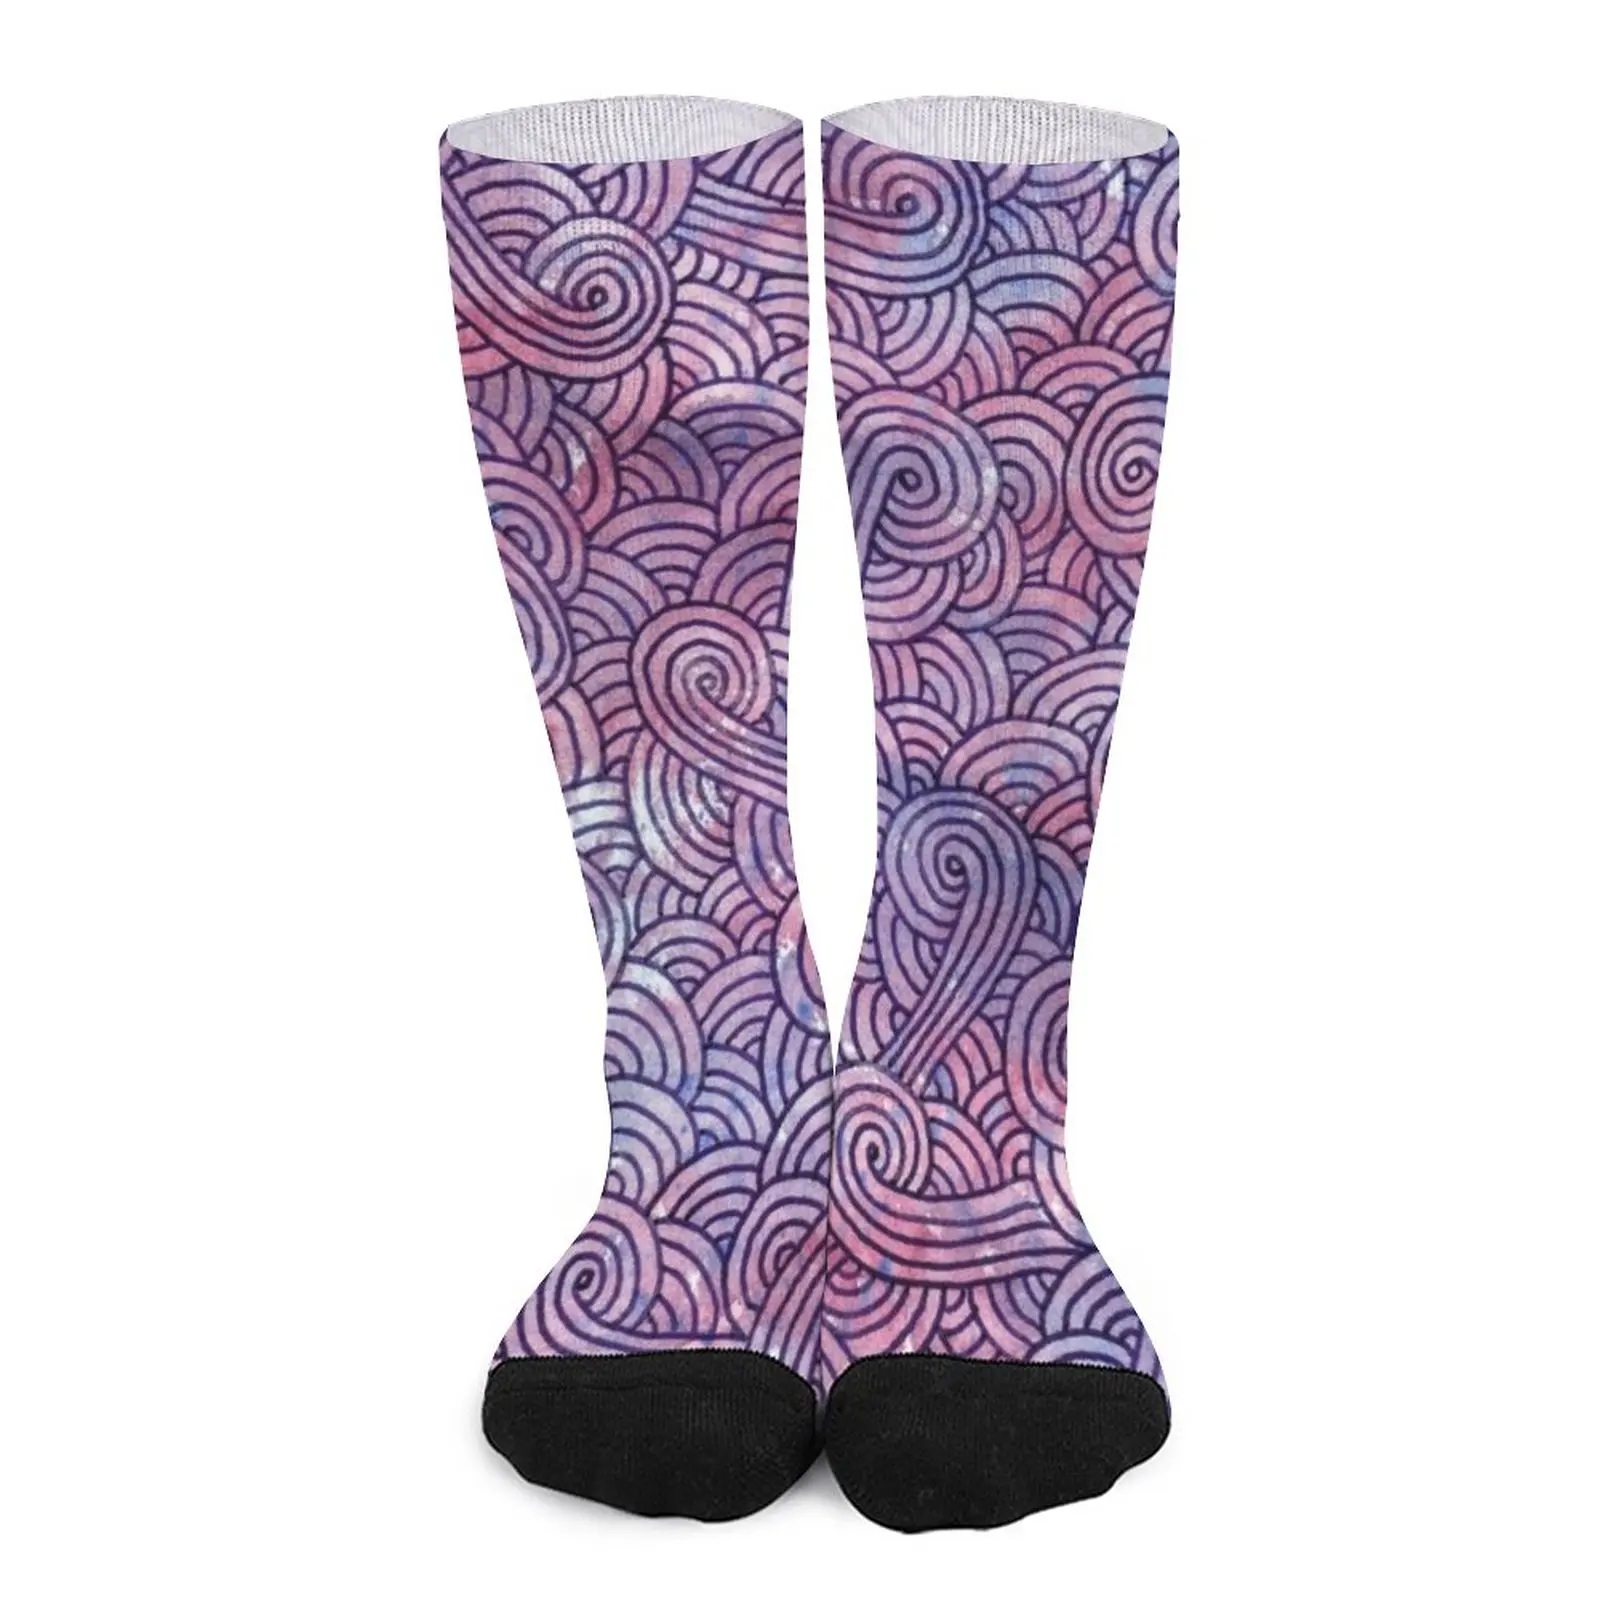 Purple swirls doodles Socks funny sock hiphop Socks for men set